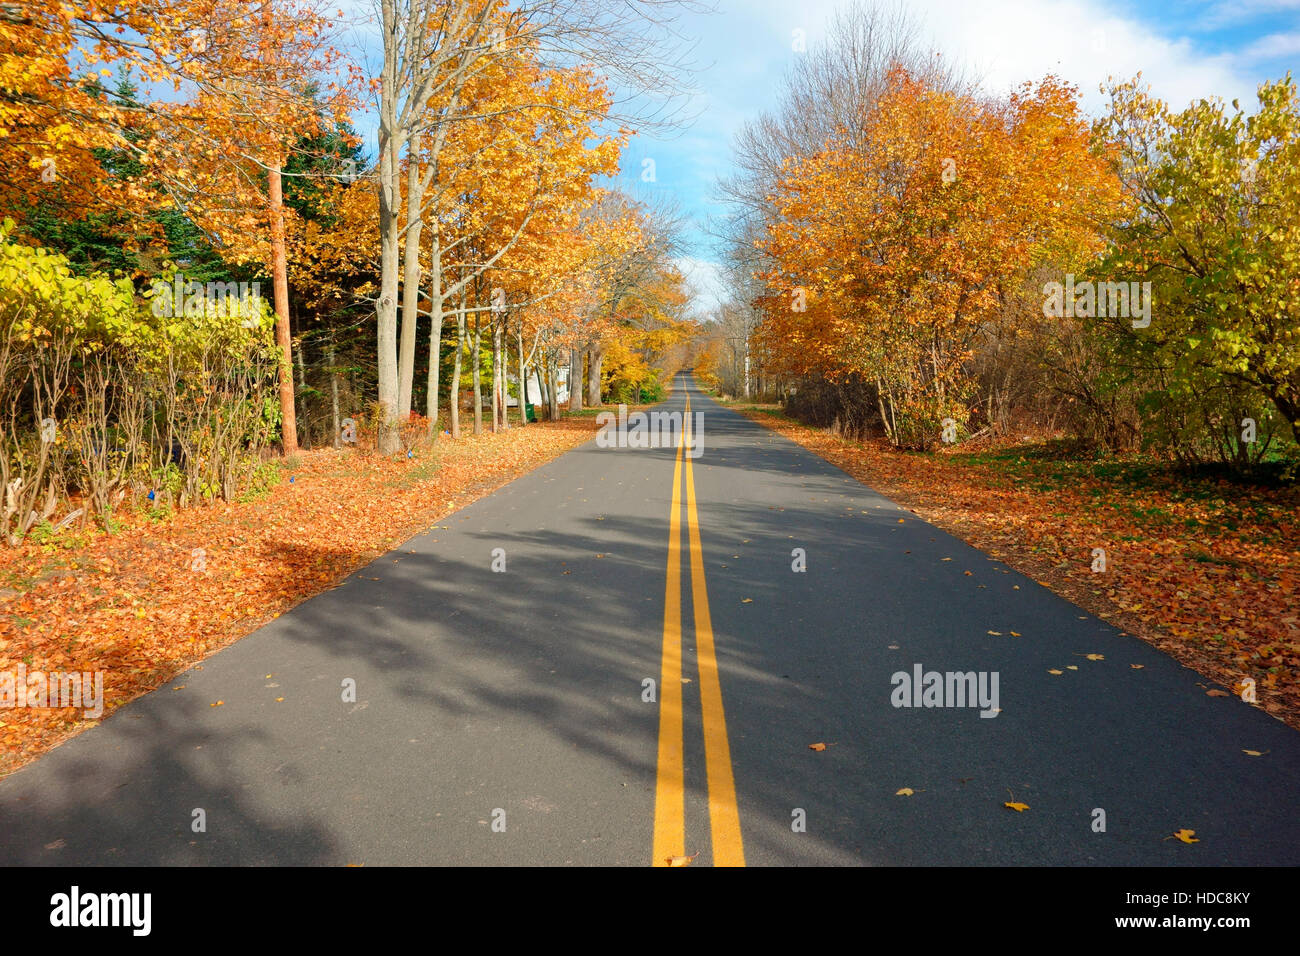 A rural paved road in Nova Scotia, Canada during autumn season Stock Photo